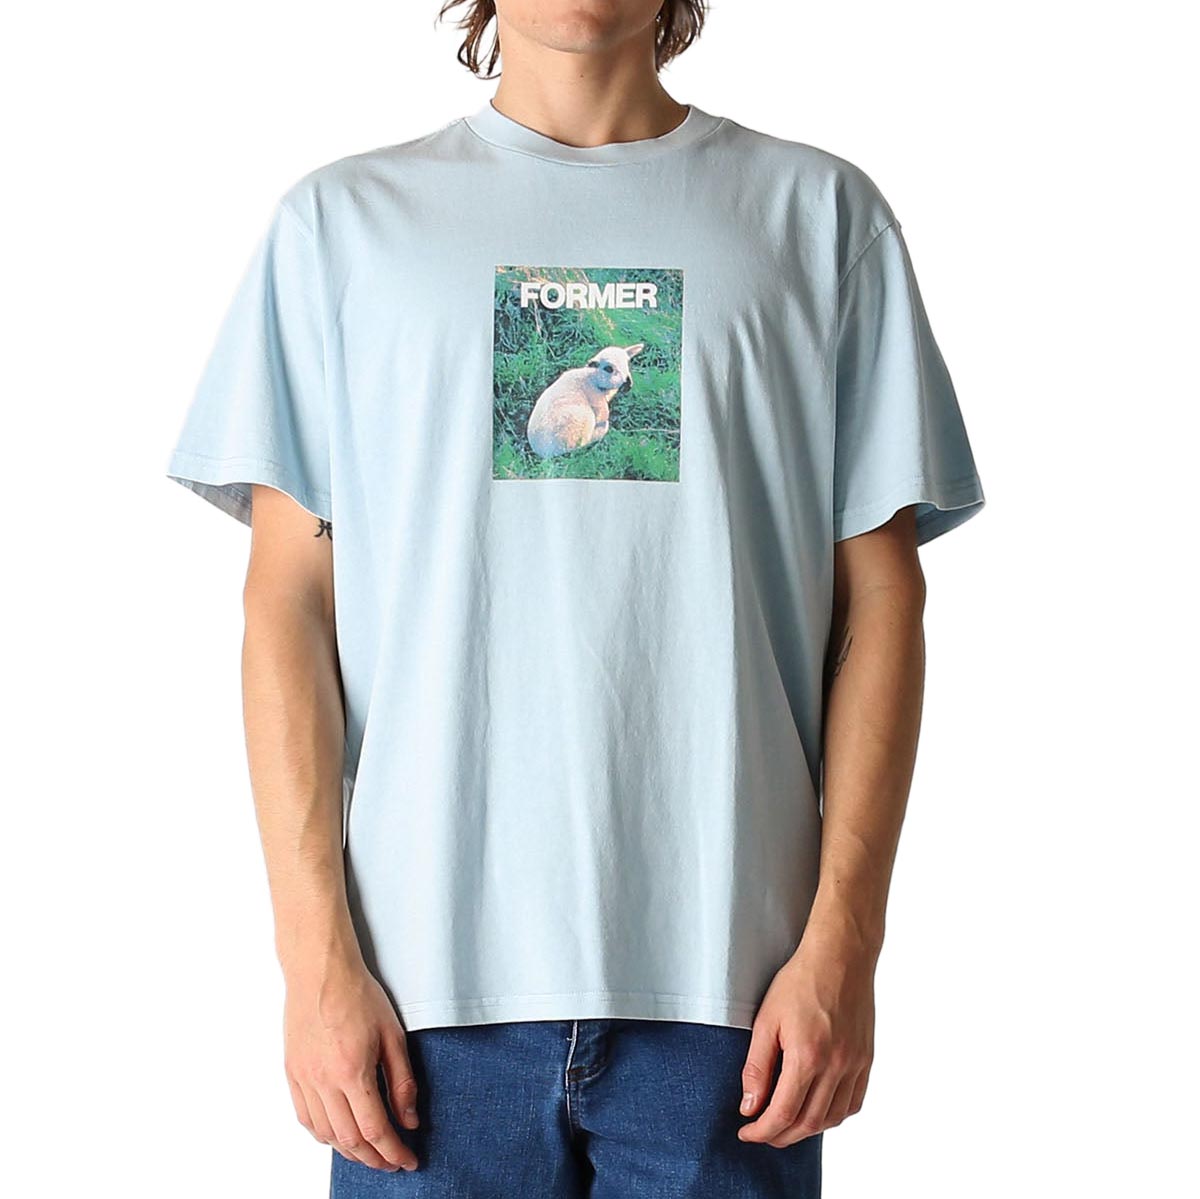 Former Innocence T-Shirt - Mist image 2